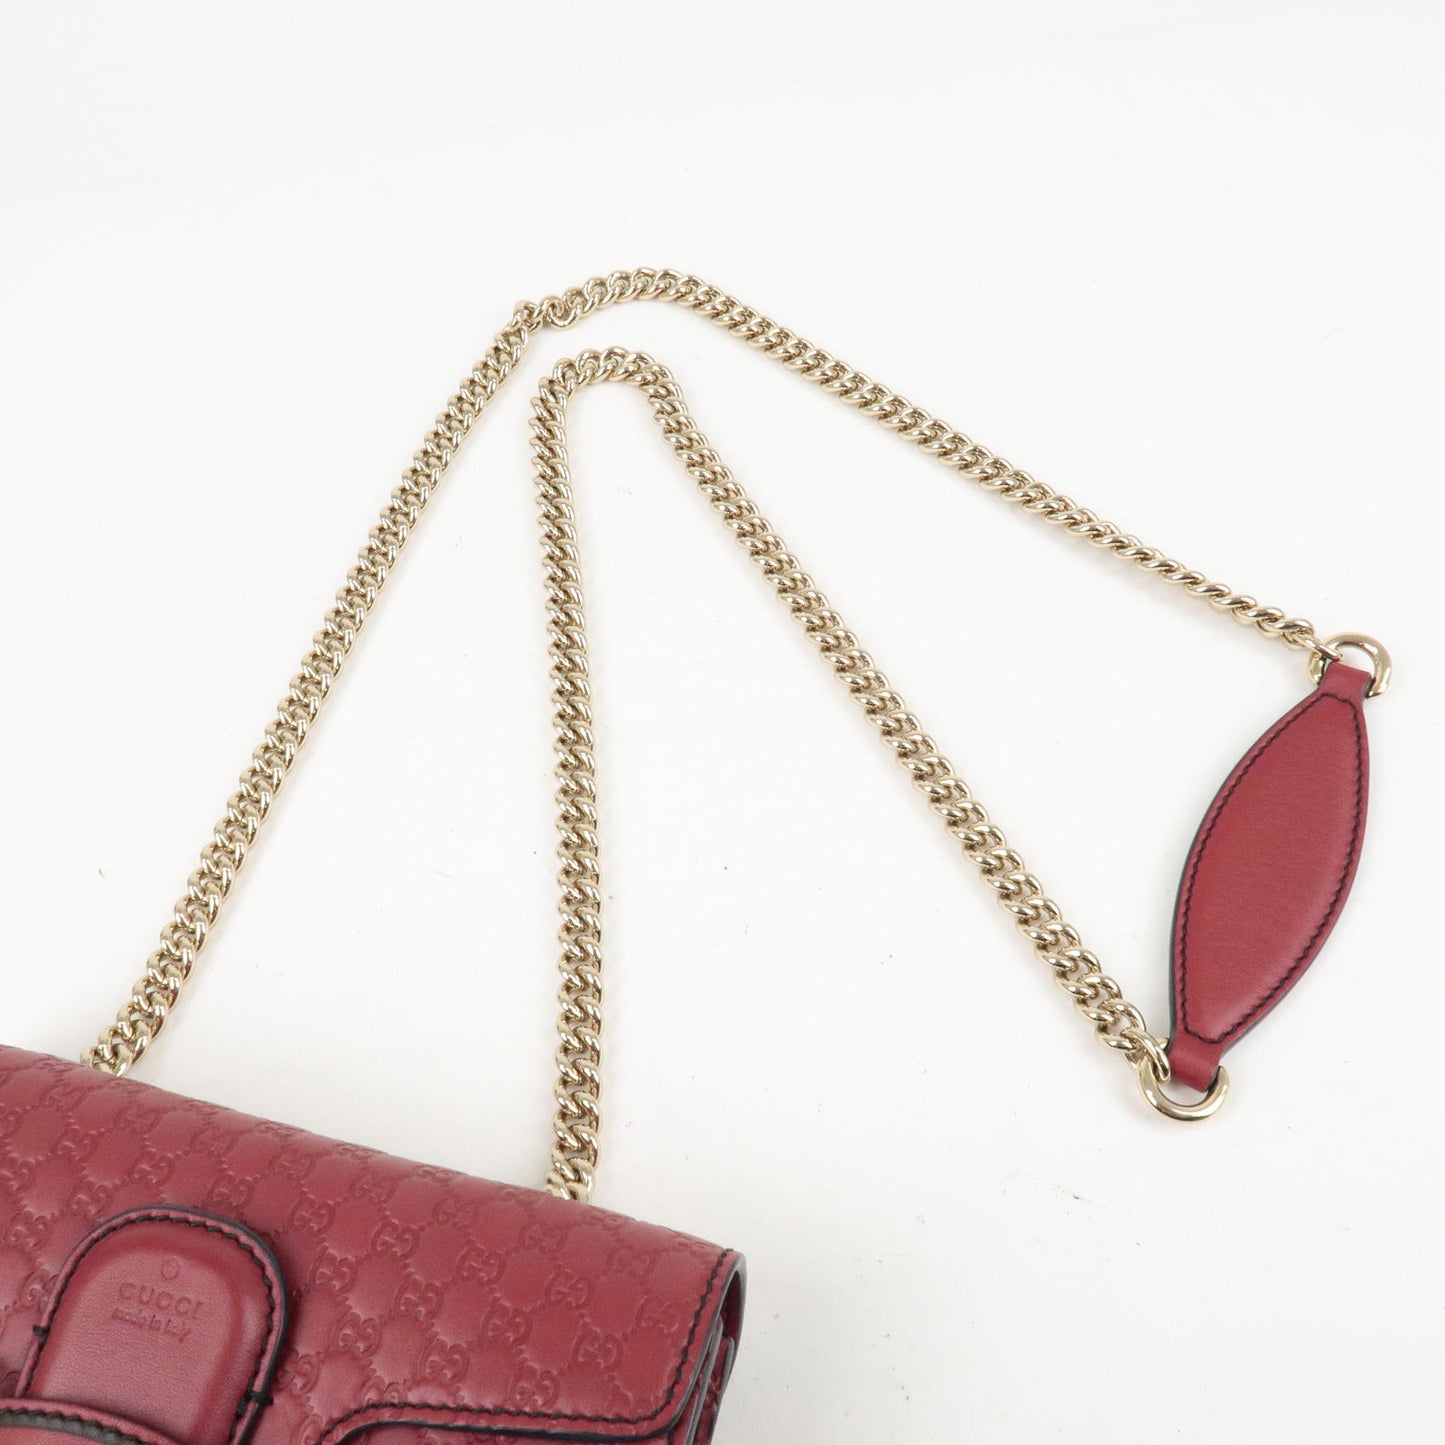 GUCCI Horsebit Emily Micro Guccissima Chain Shoulder Bag 449636